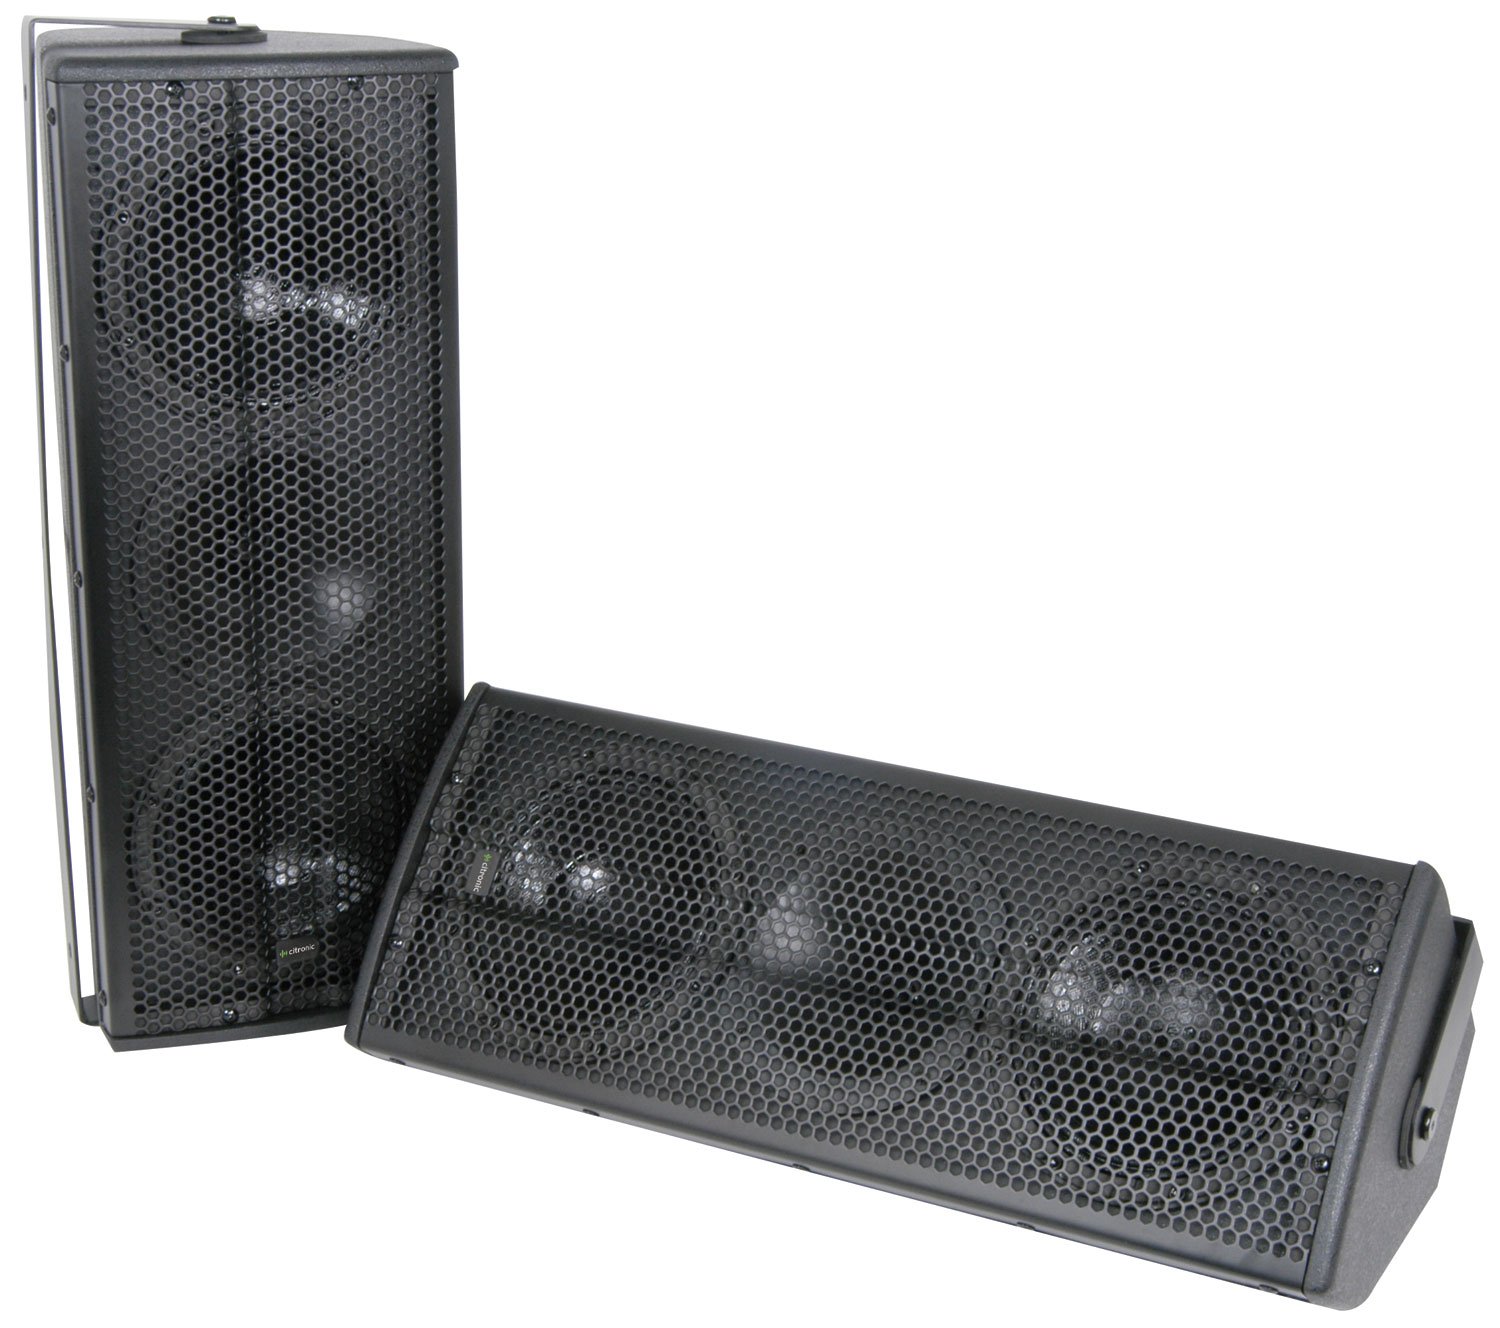 2 x 6.5" Speakers 160W - Pair CX-1608 speakers 2 x 6.5" 160W pair - black